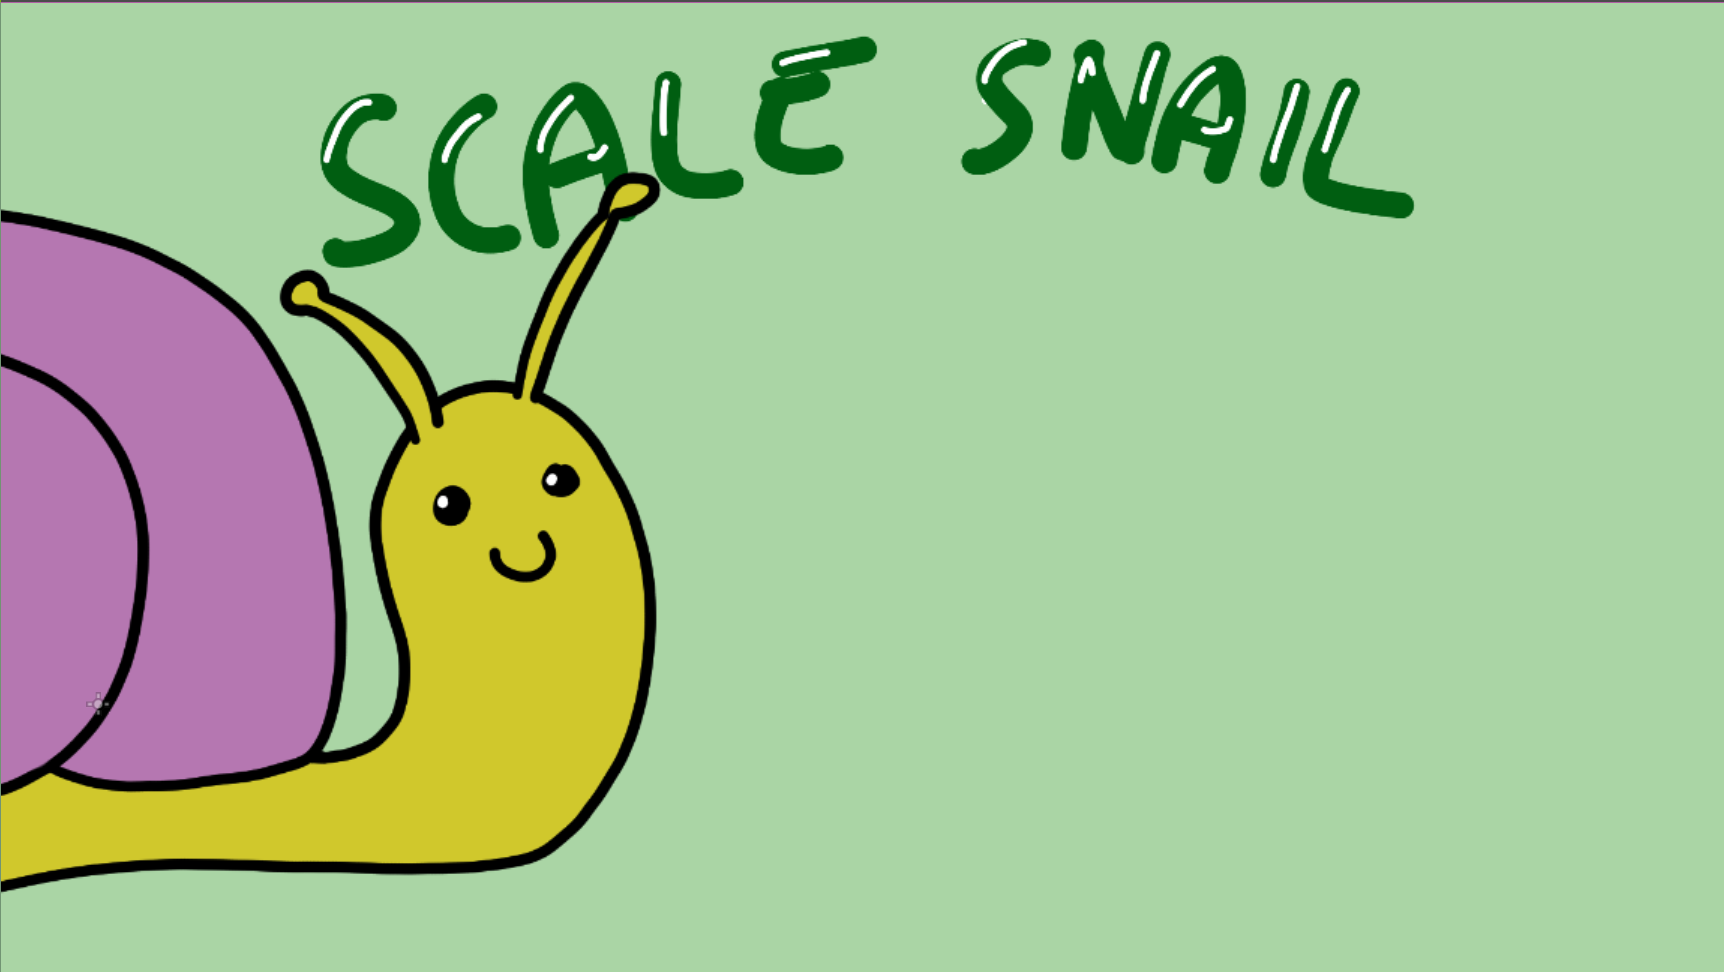 Scale Snail!